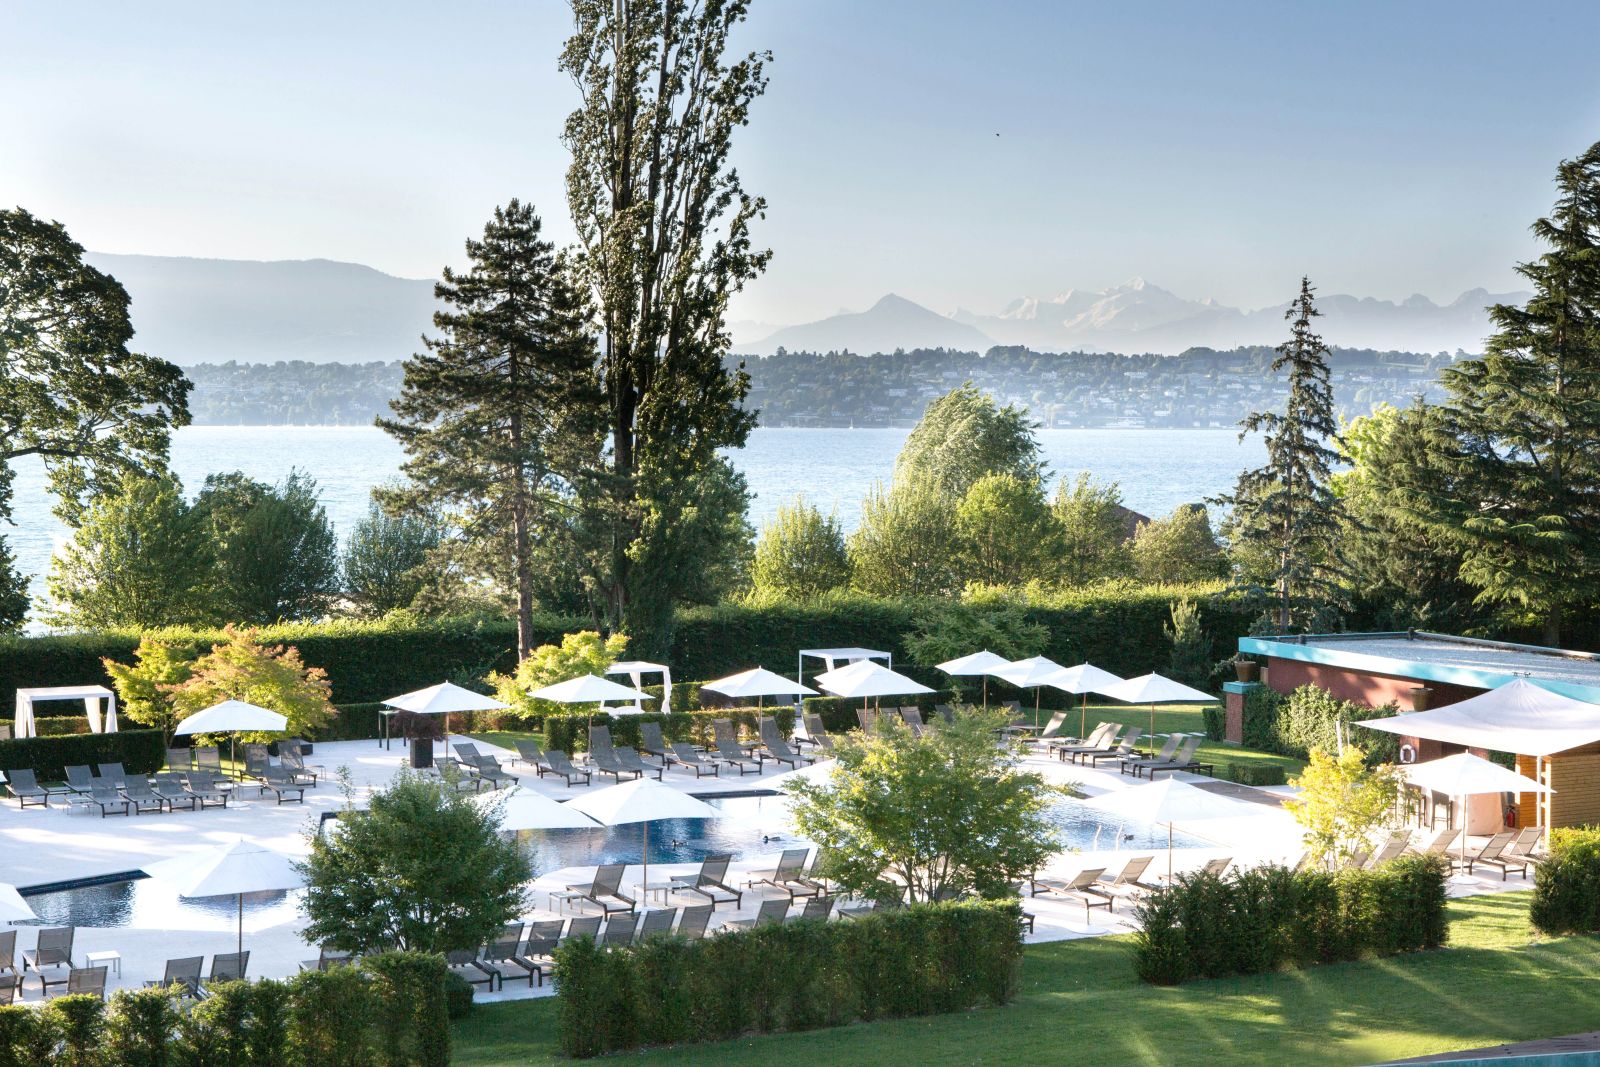 Swimming pool and lake views at La Reserve Geneva Switzerland